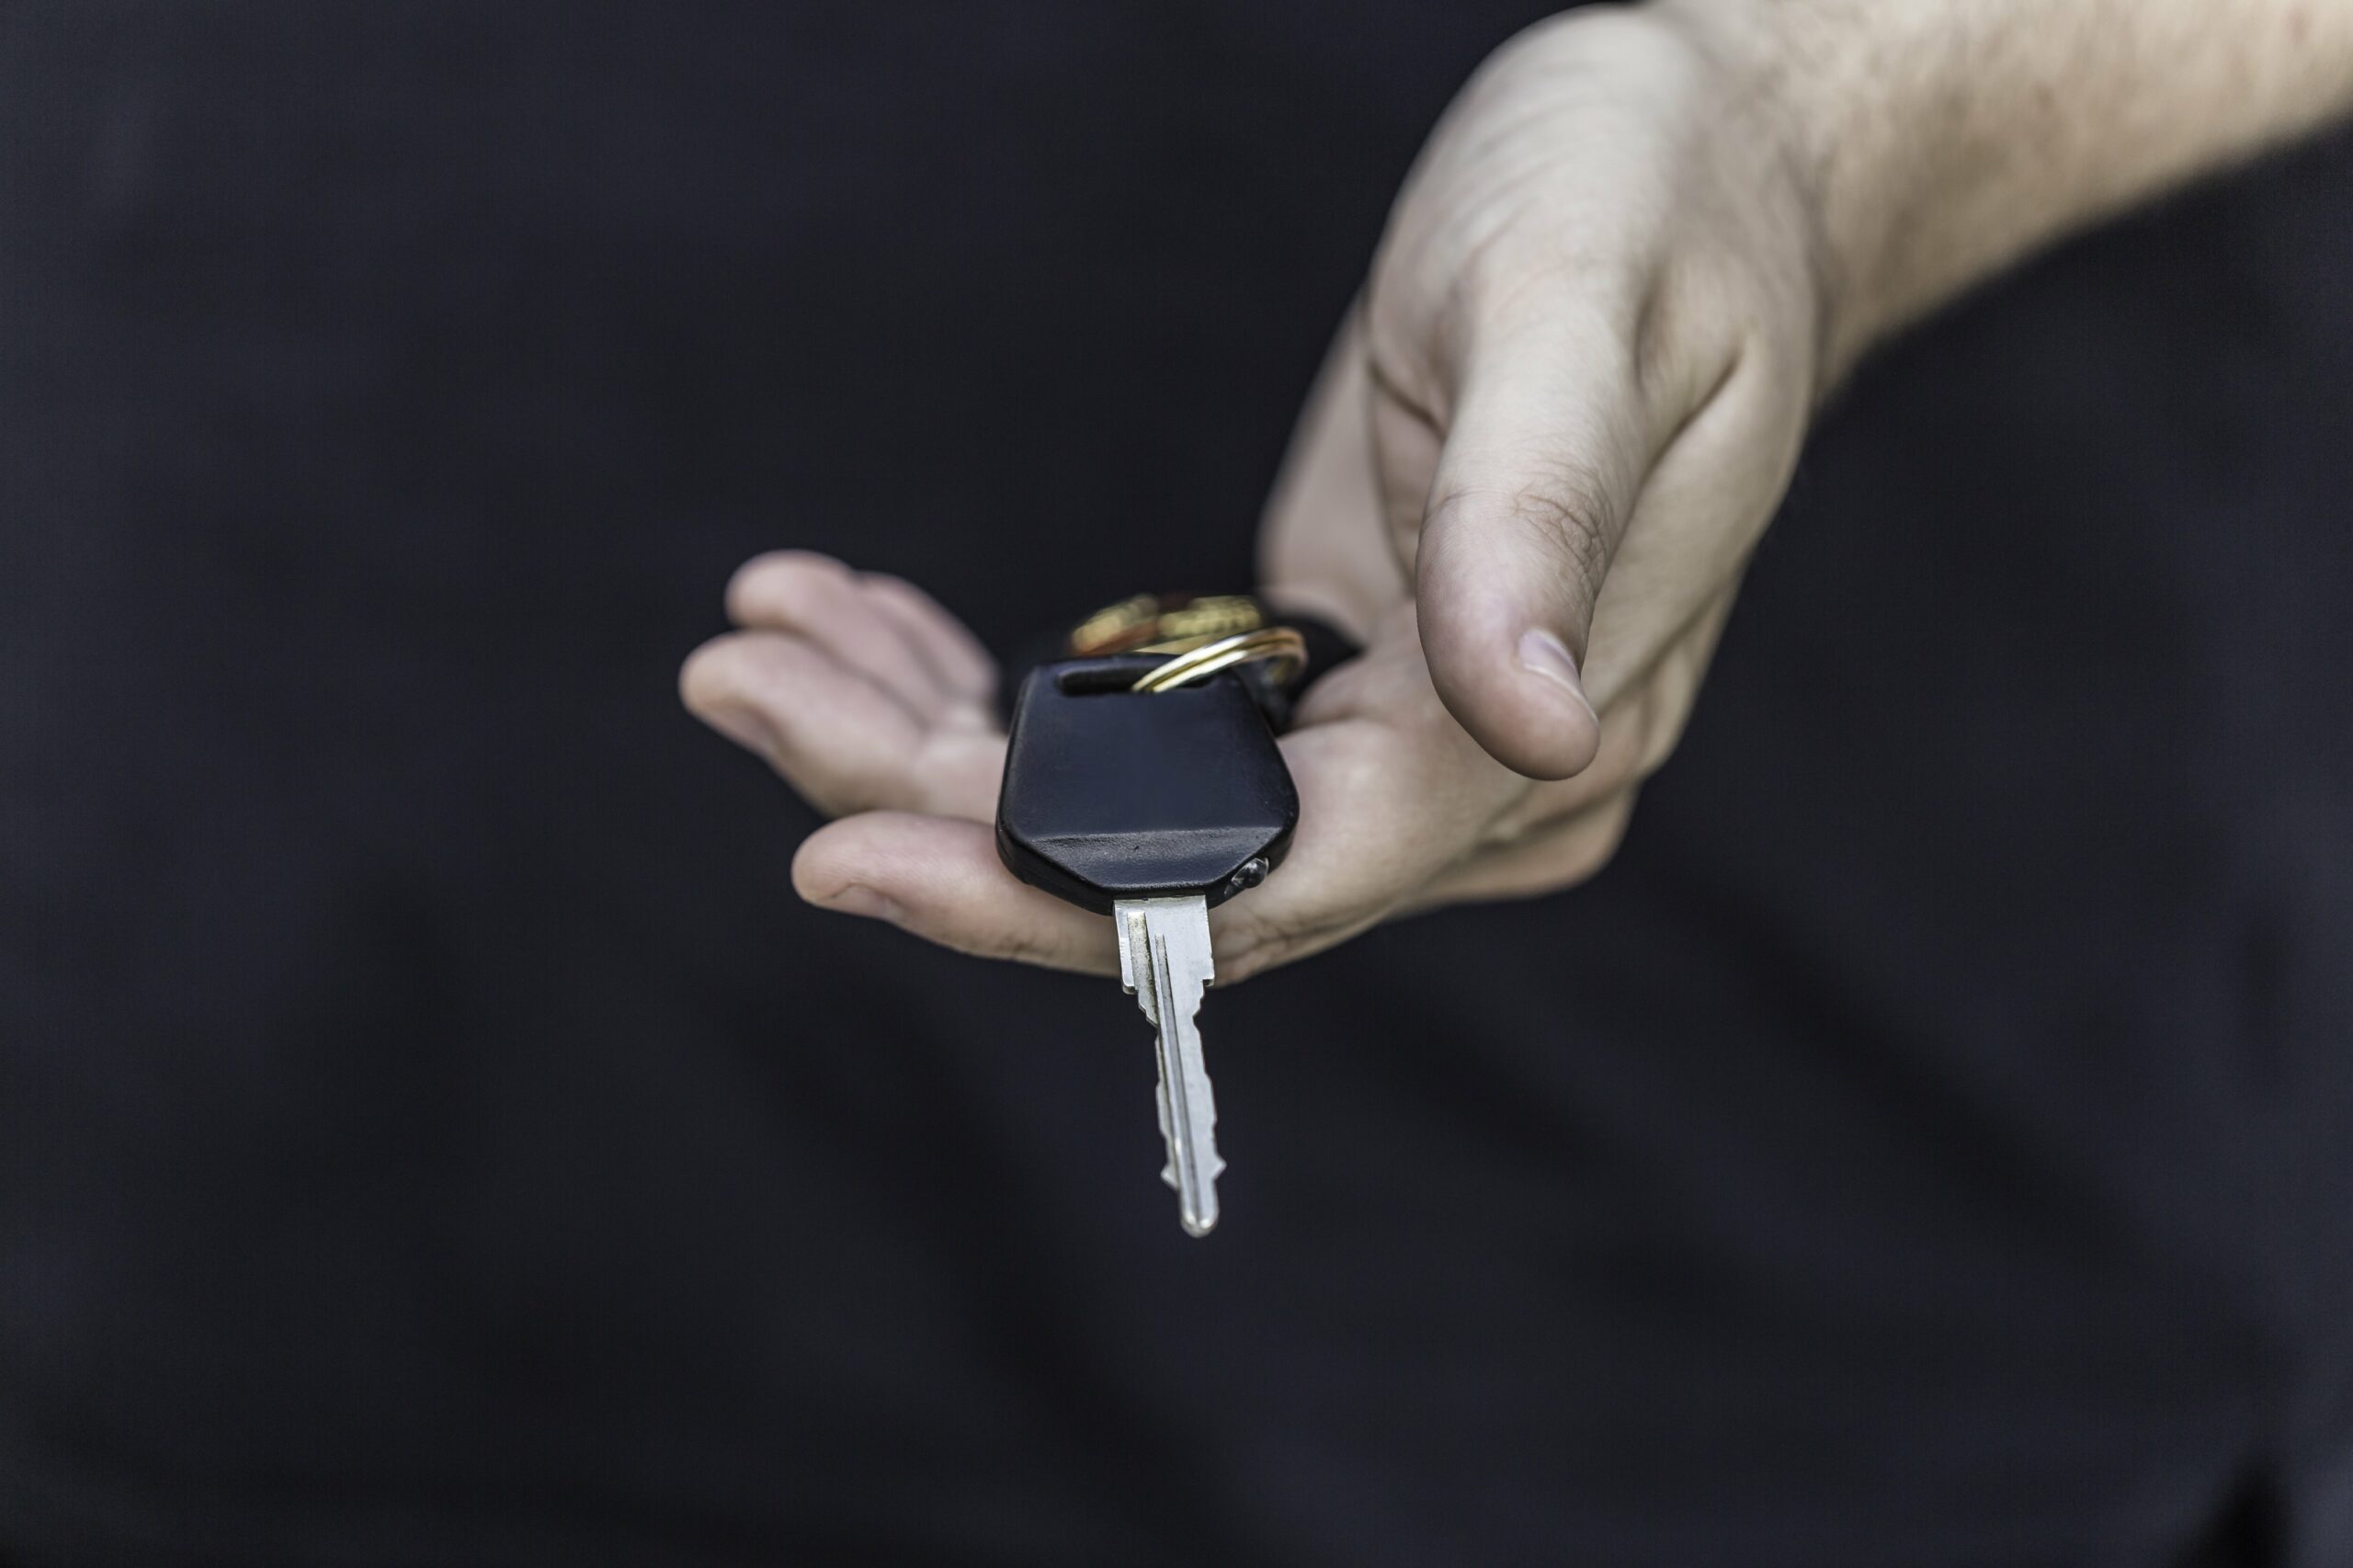 Hand holding a vehicle key